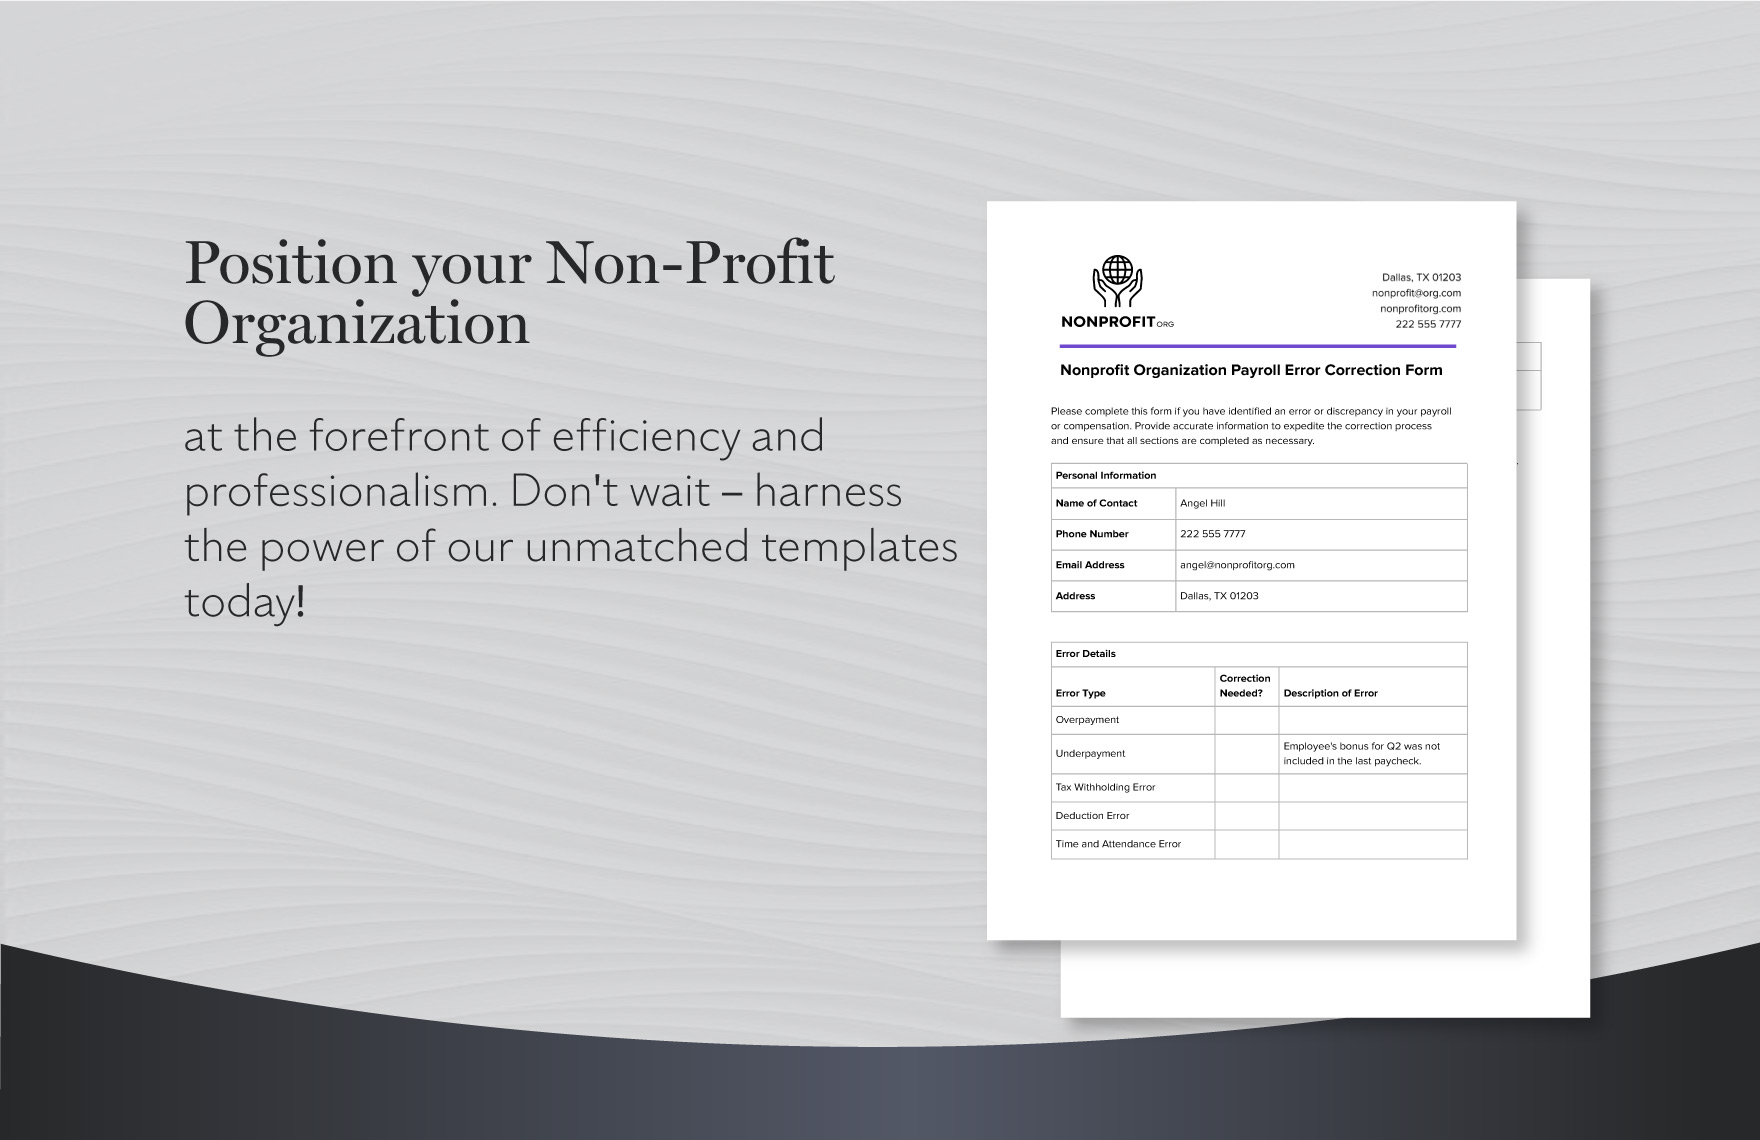 Nonprofit Organization Payroll Error Correction Form Template